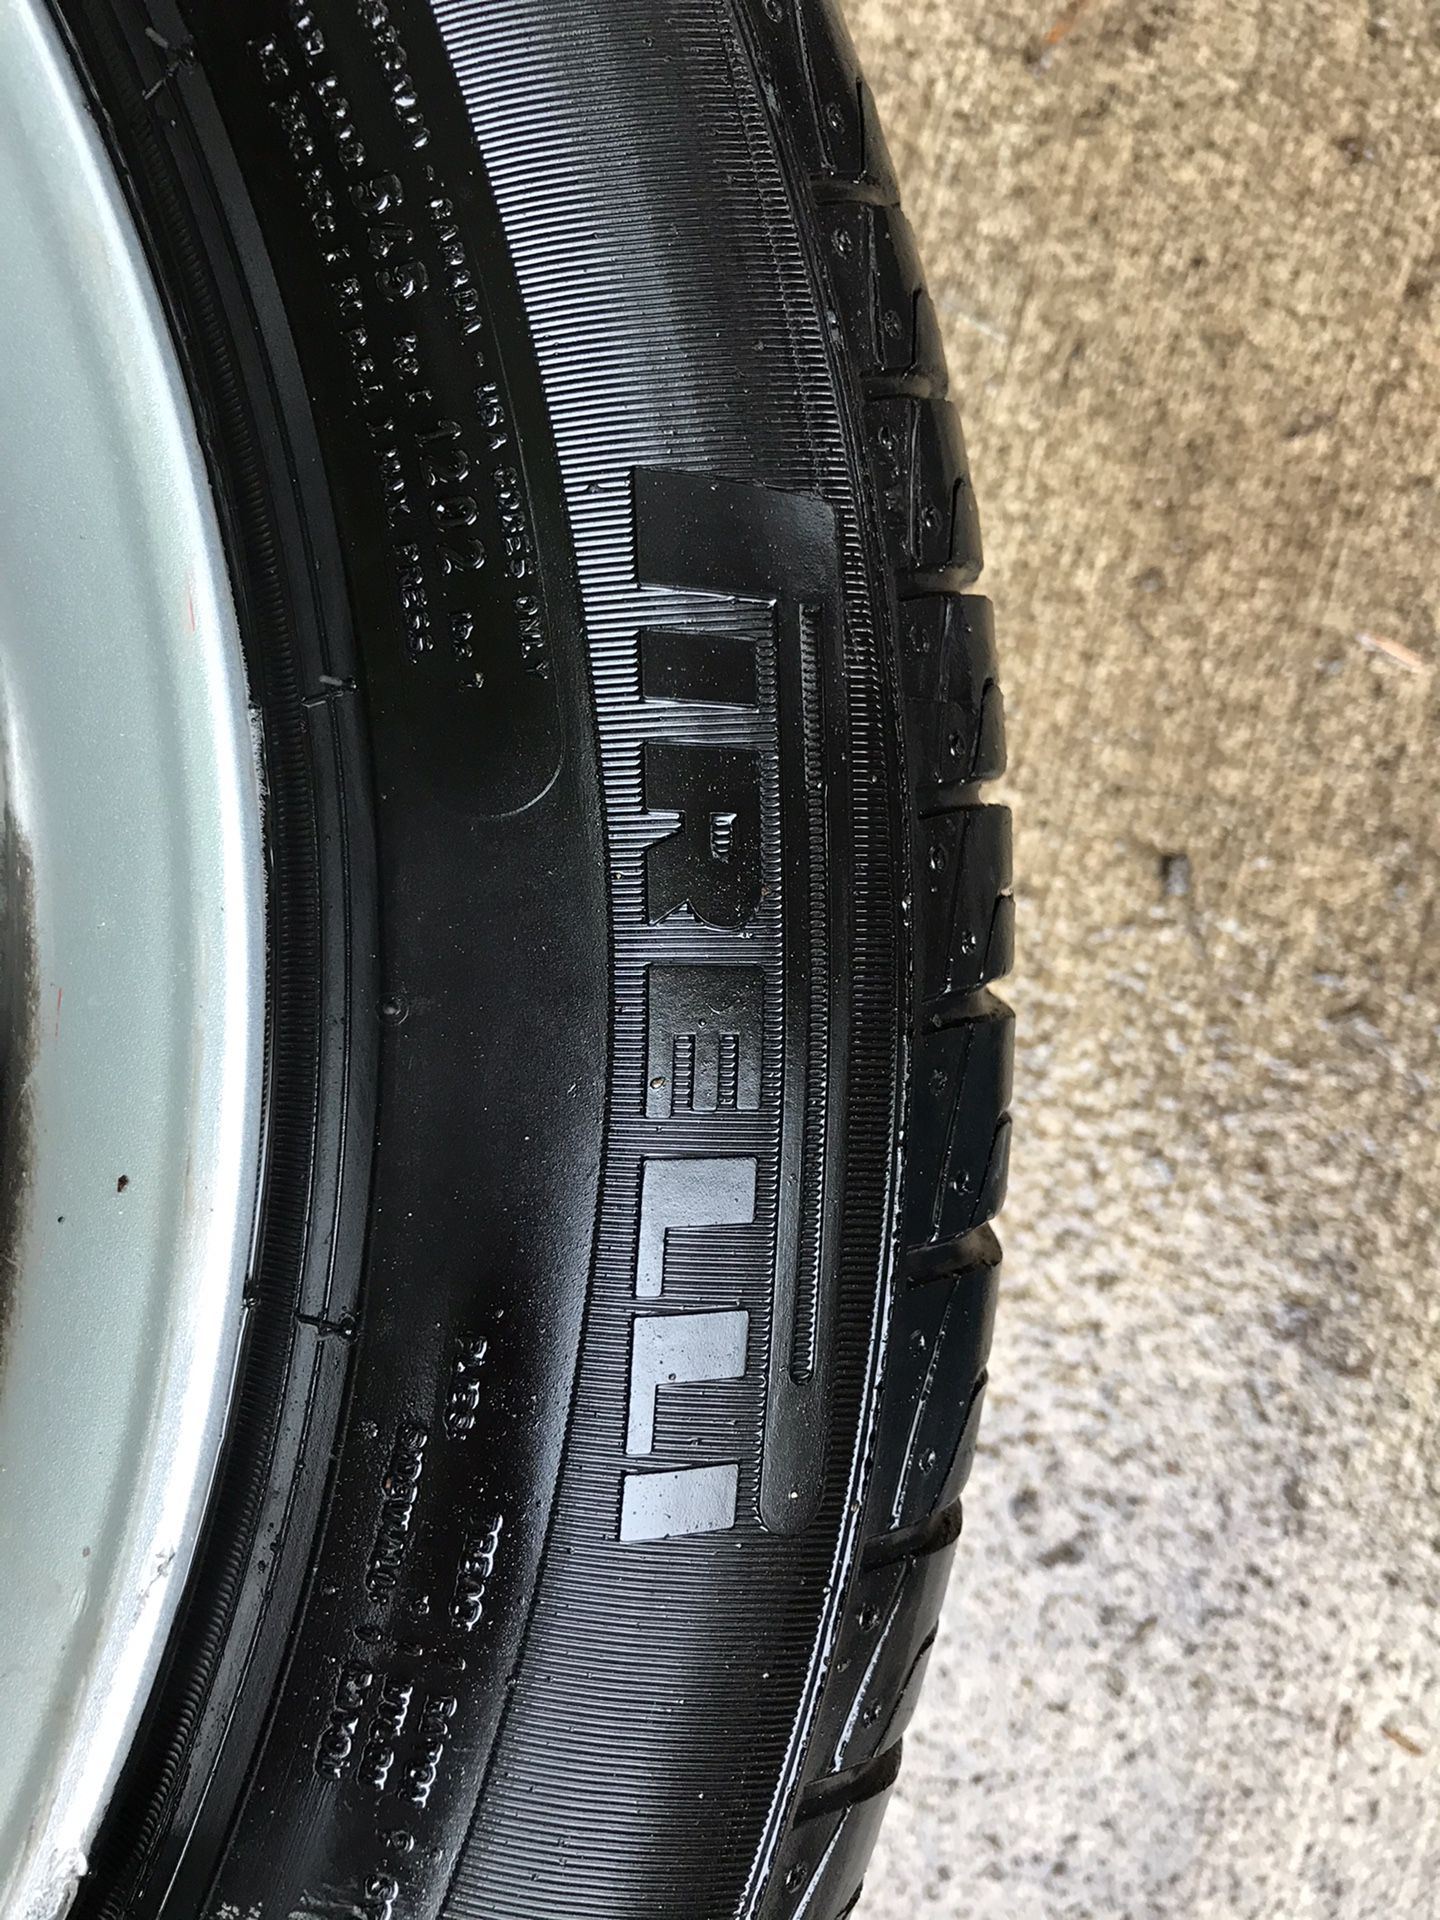 16” Mini Cooper wheels and Pirelli tires.